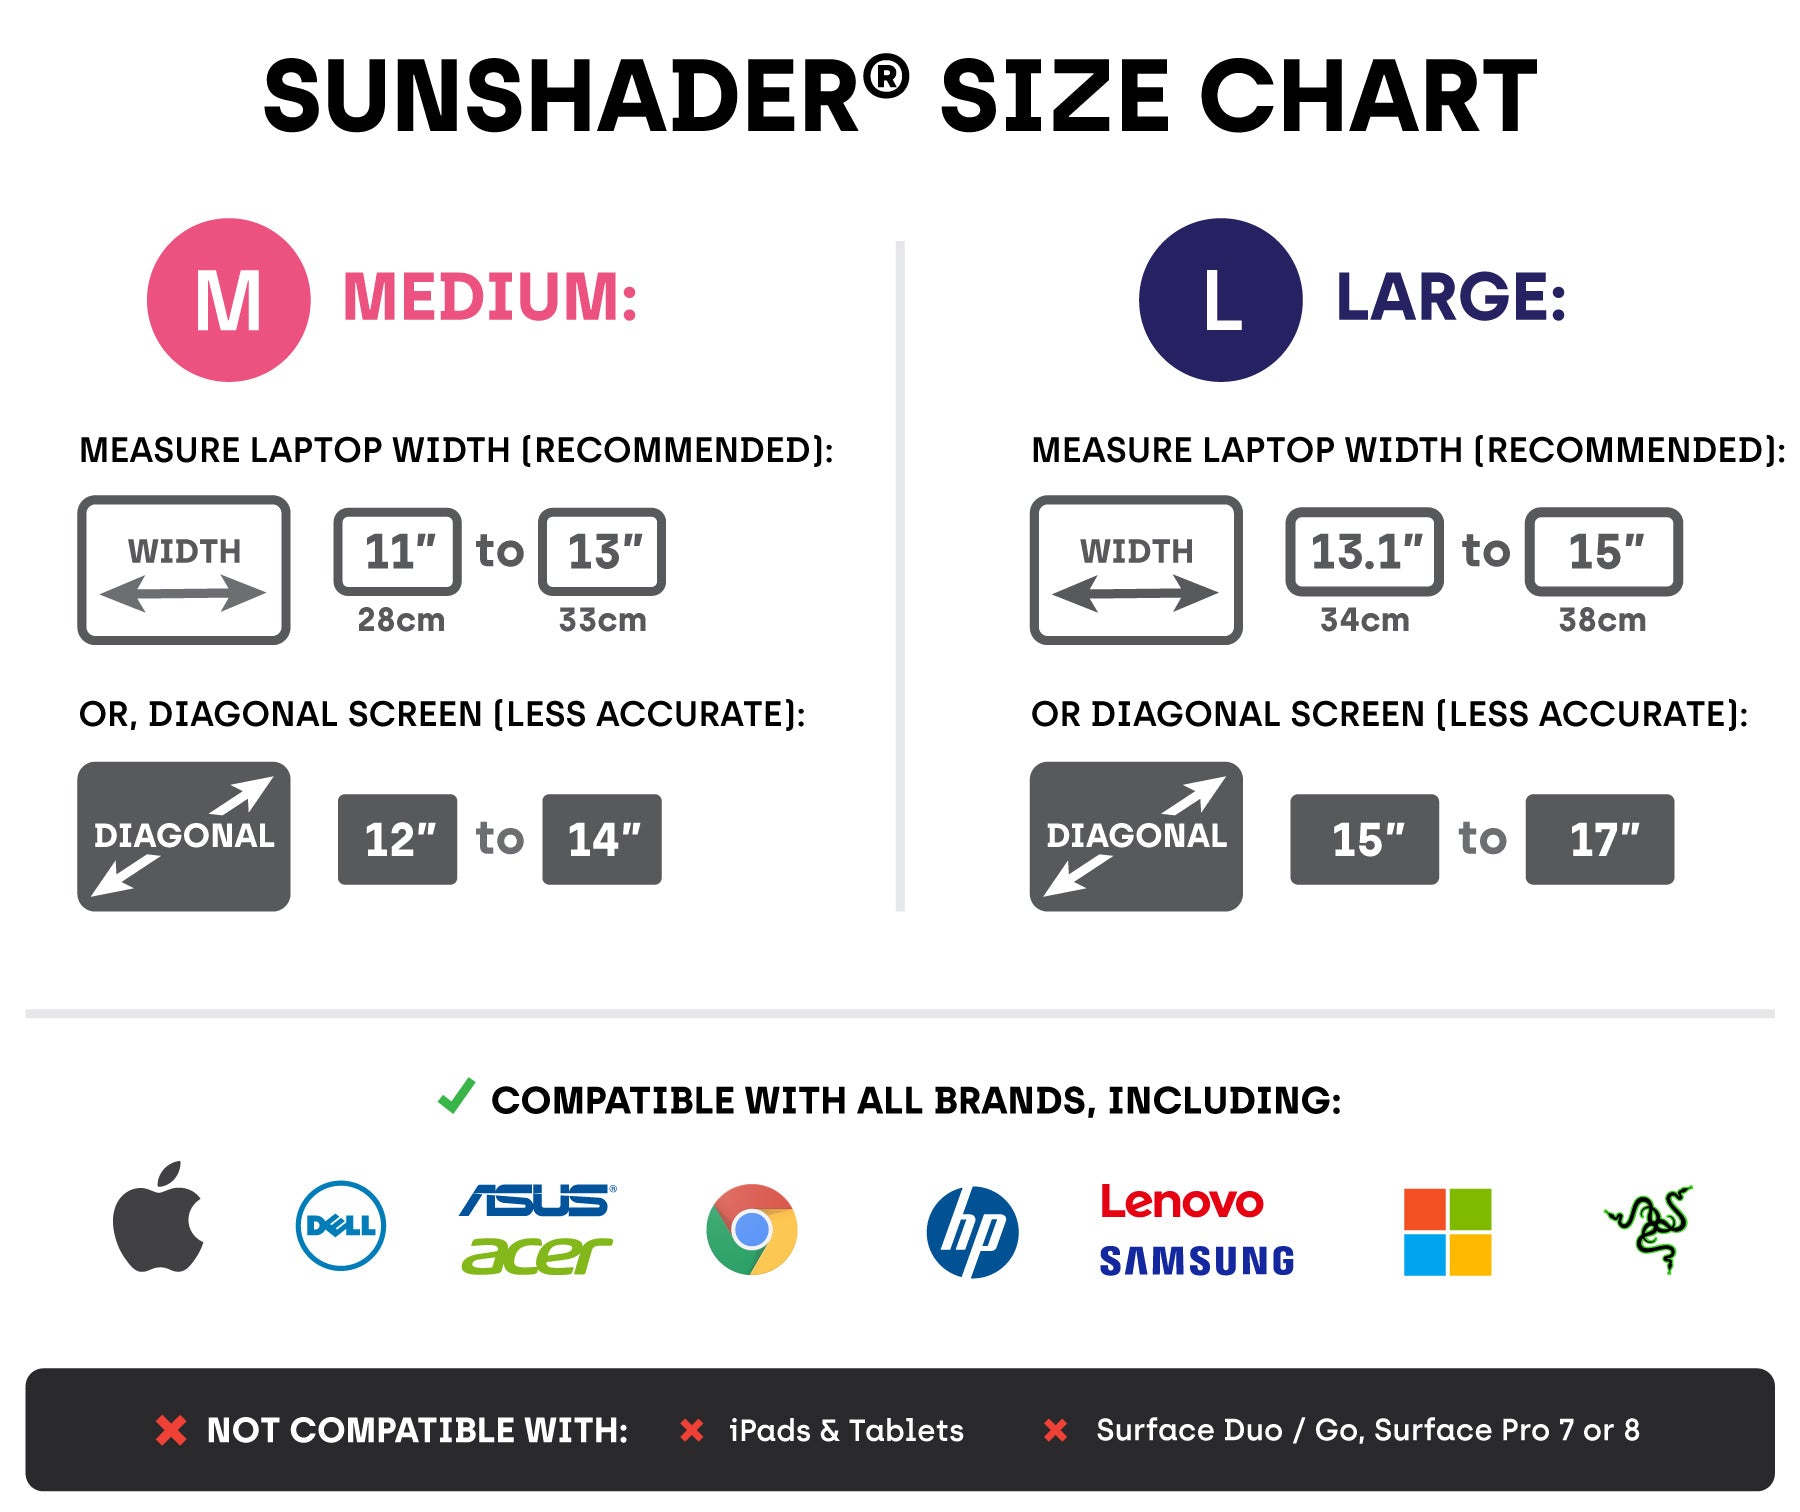 SunShader 3 - Laptop Sun Shade (Australia)